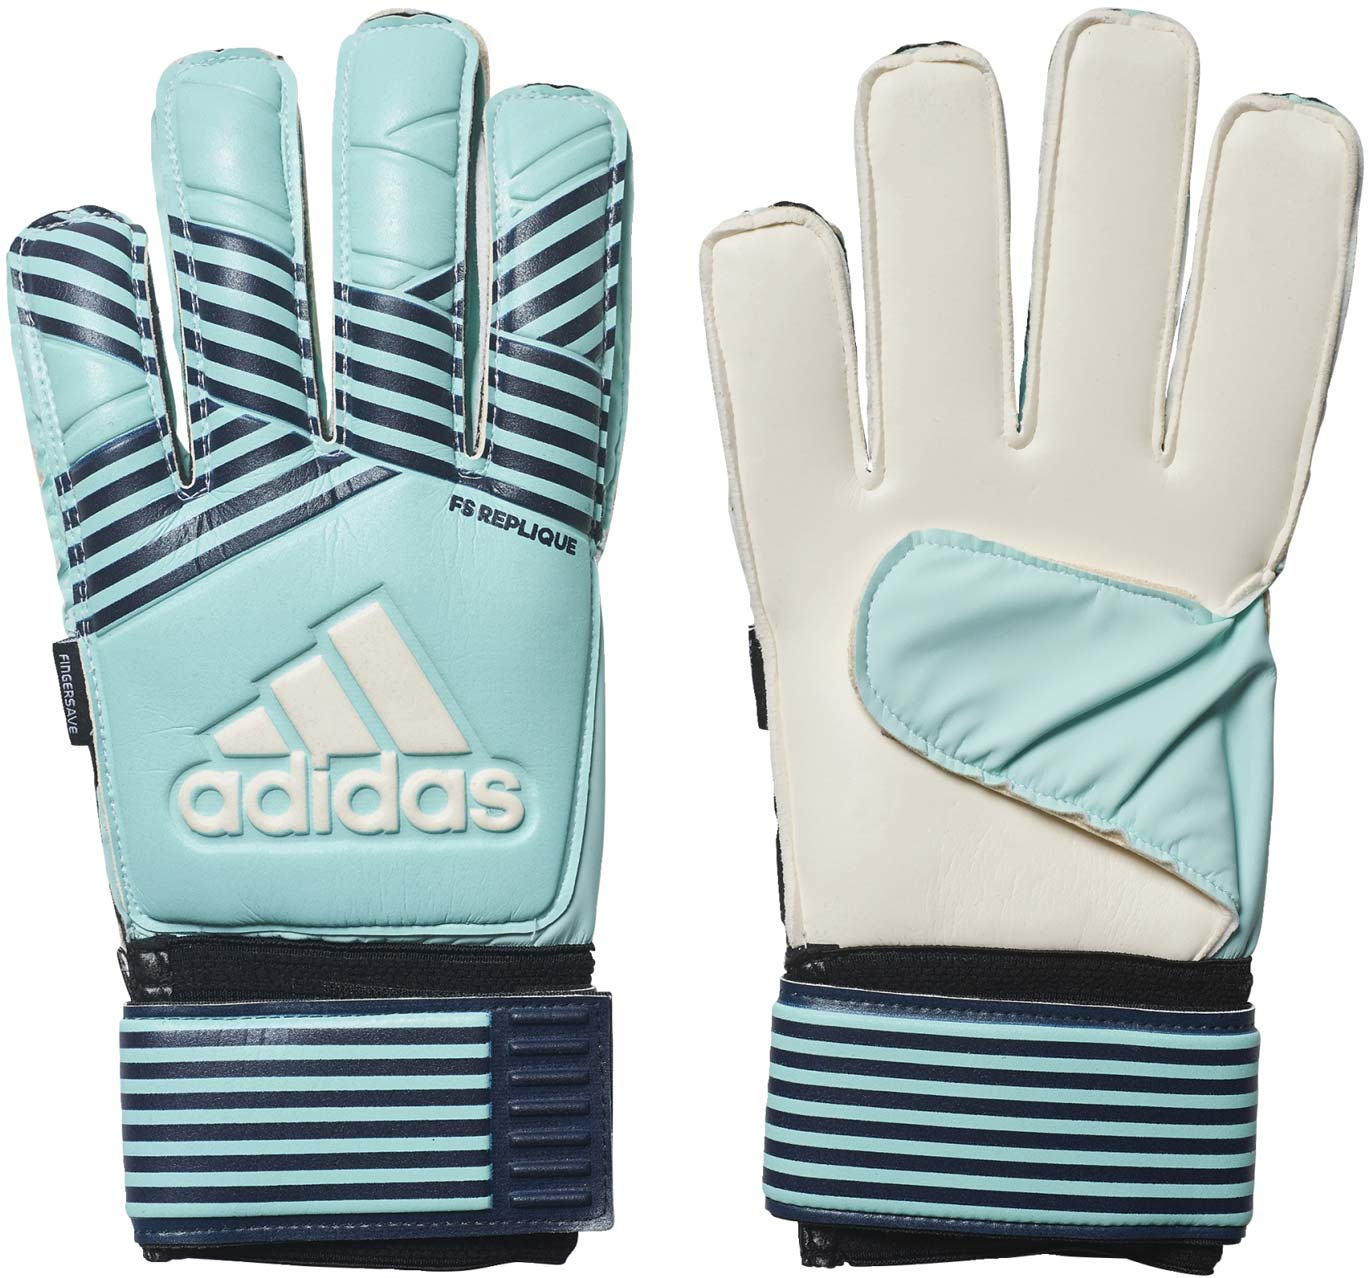 Adult goalkeeper gloves